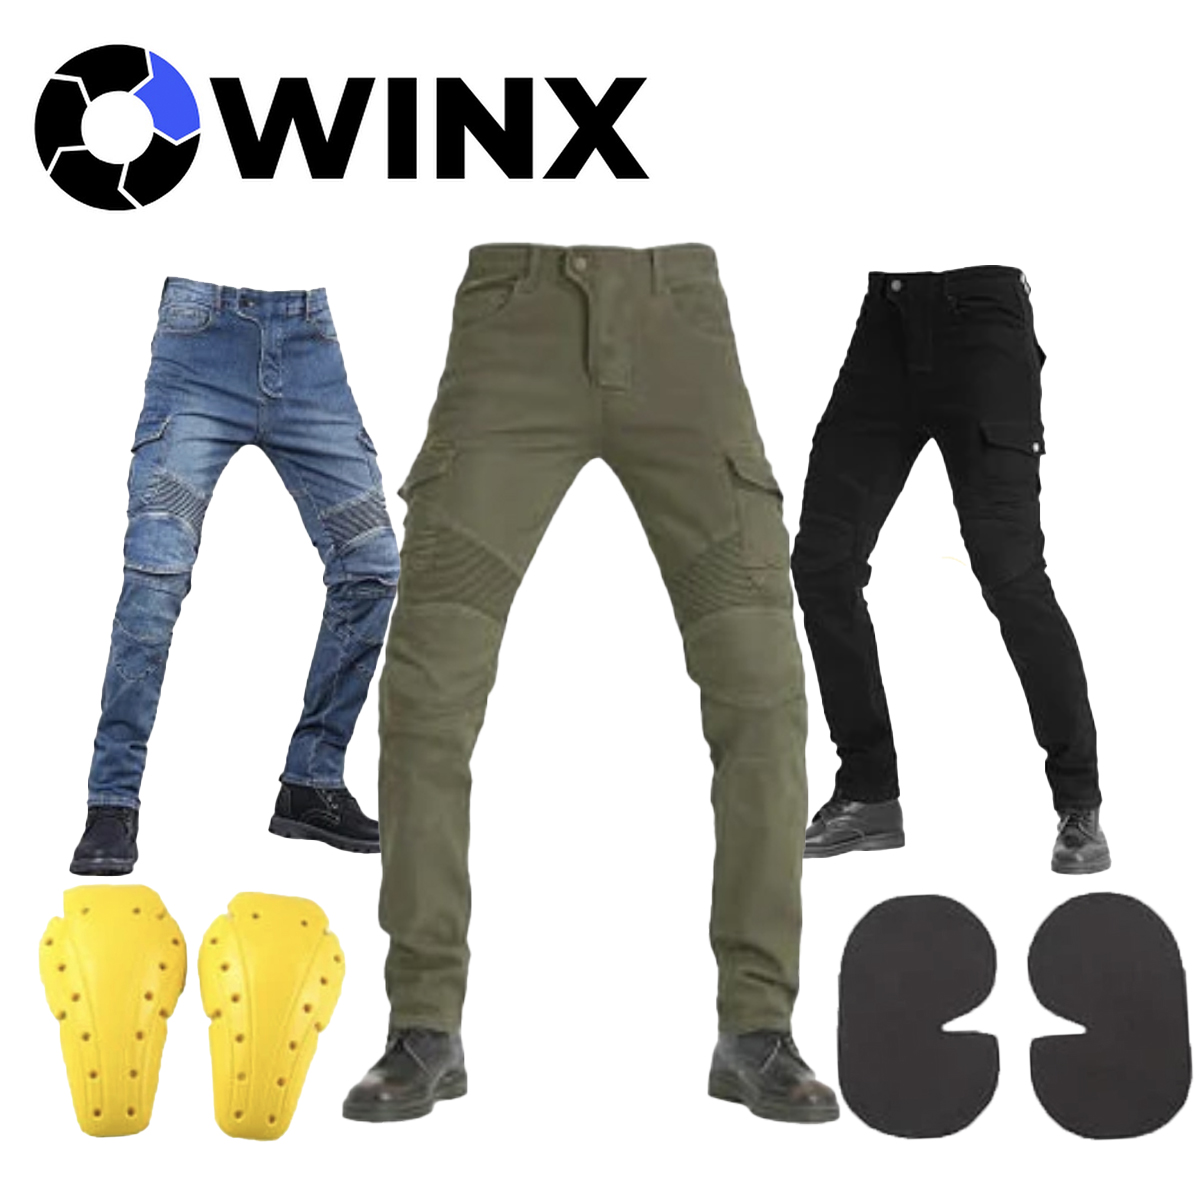 Winx Wheels reviews